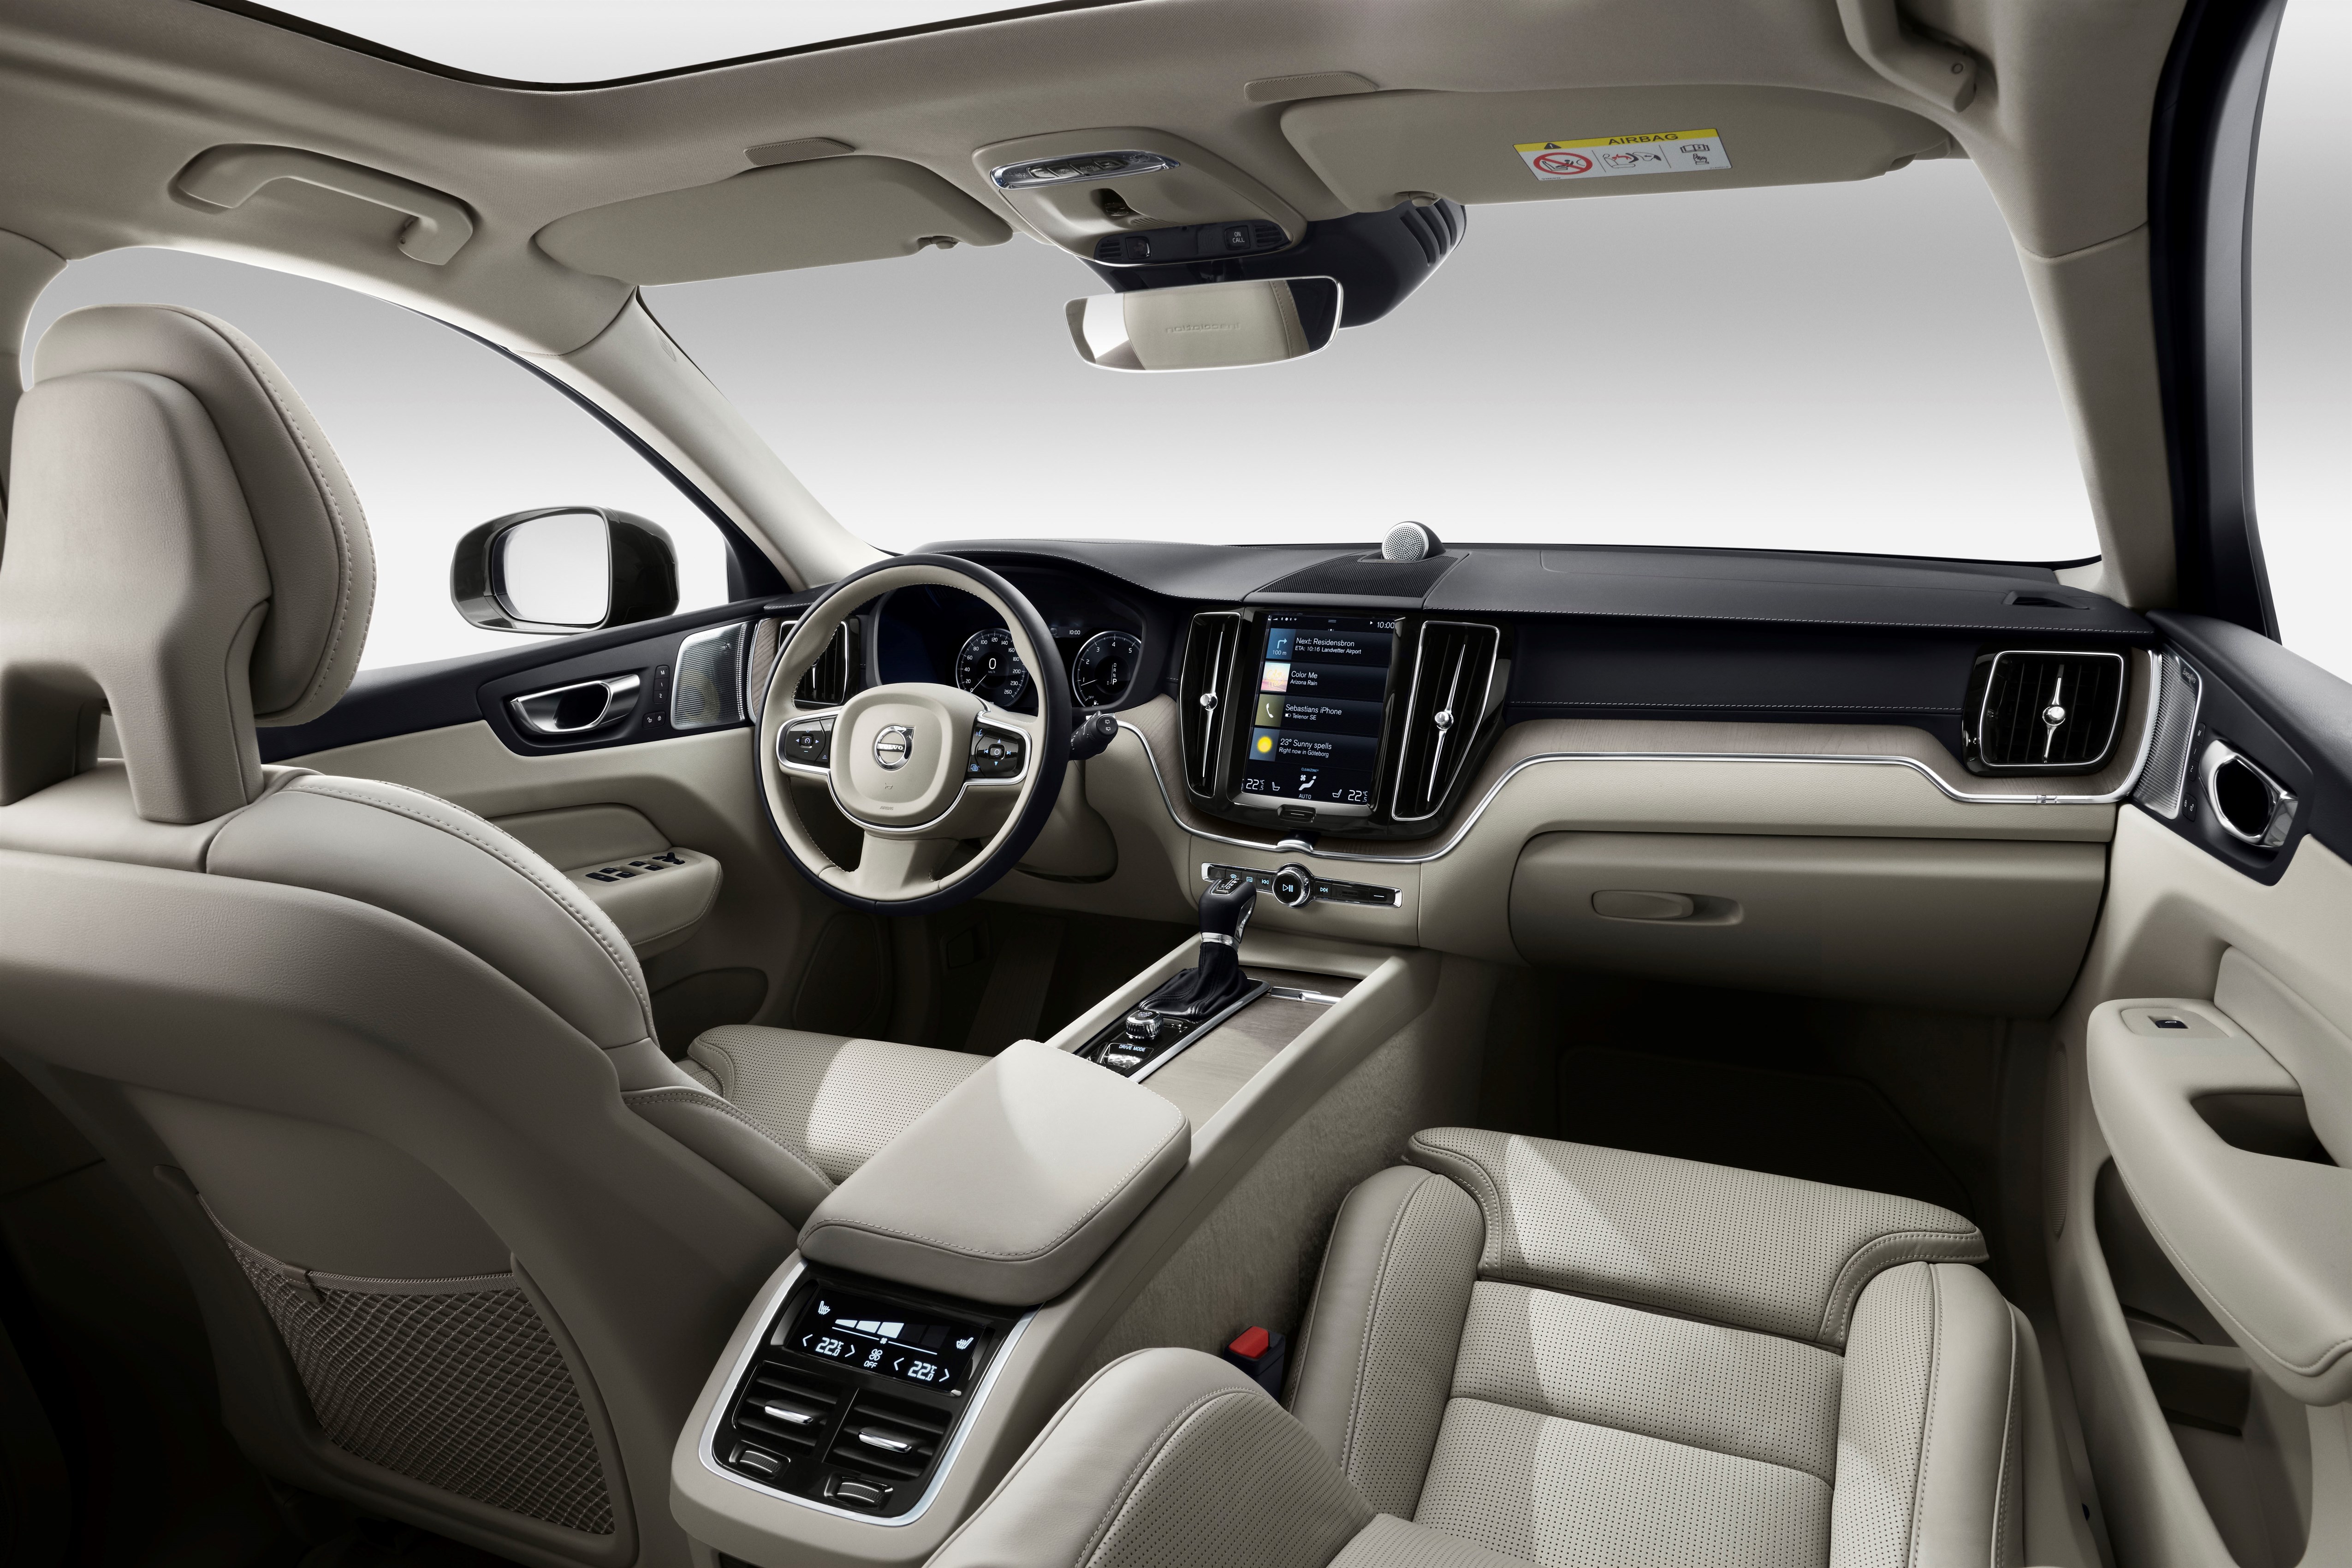 2017 Volvo XC60 interior